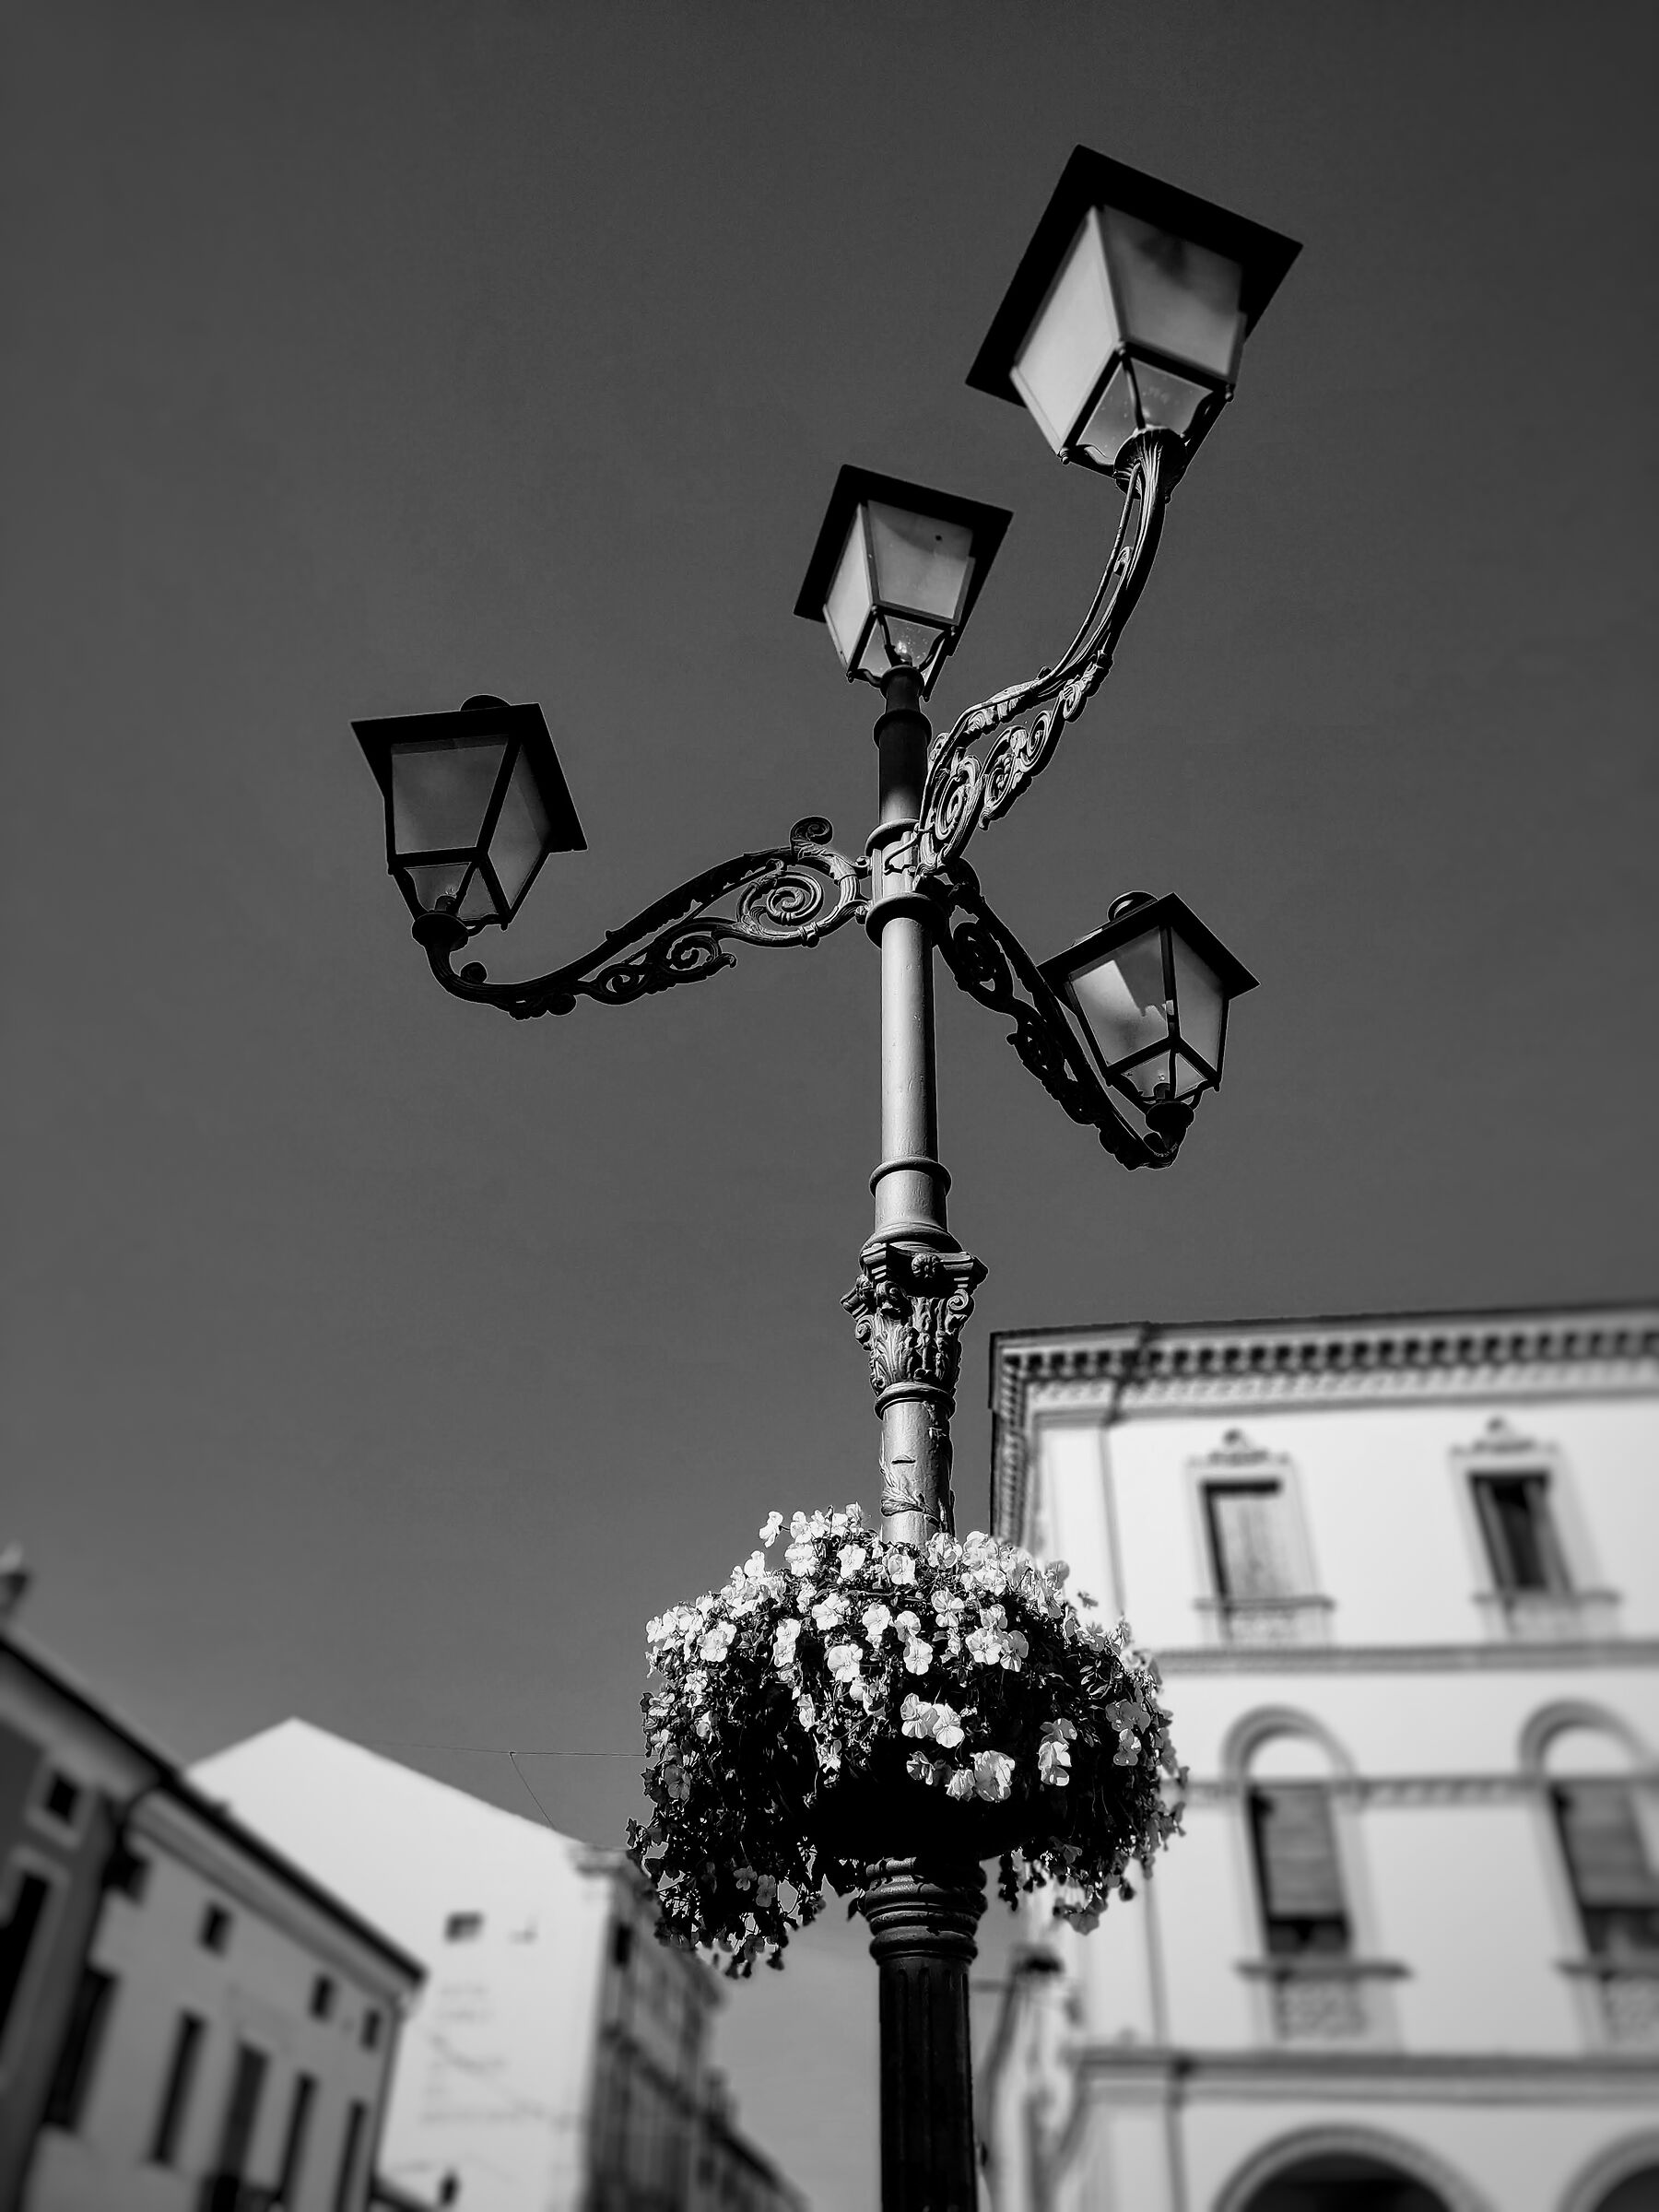 B/W Street Lamp with flower...